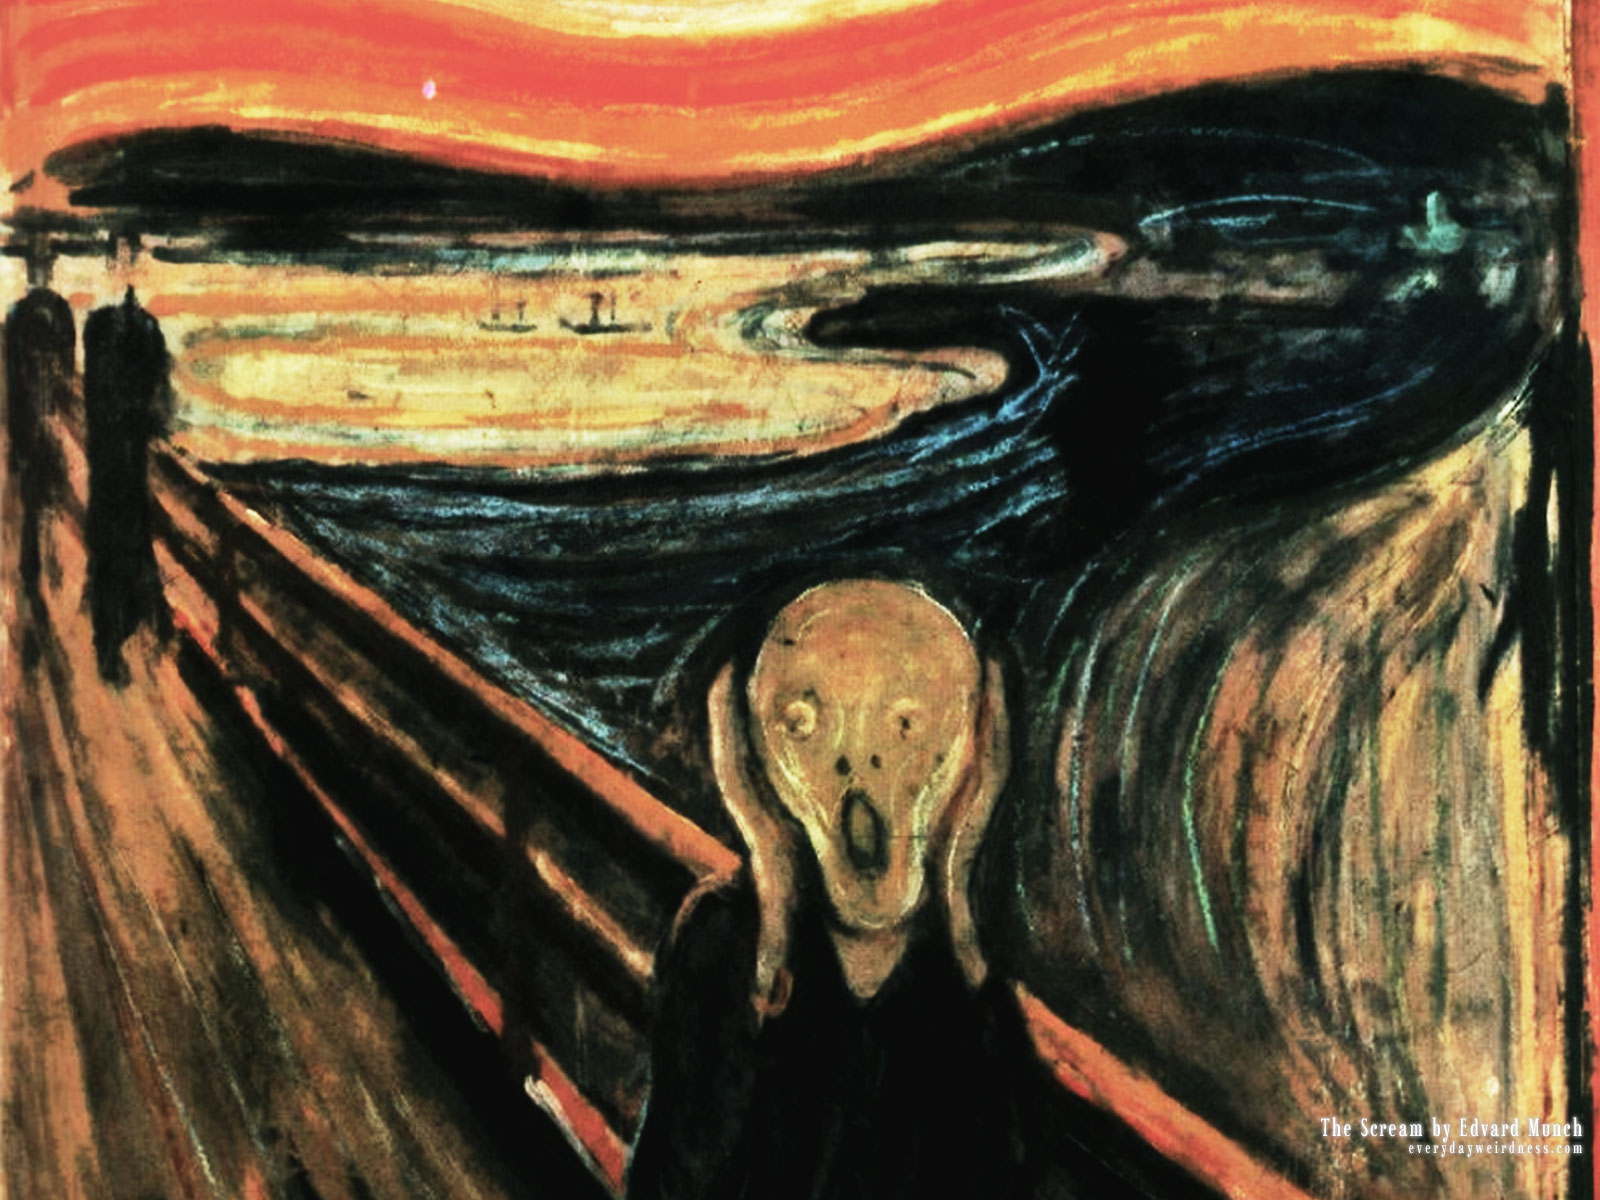 The Scream by Edvard Munch - Everyday Weirdness January 24th 2009